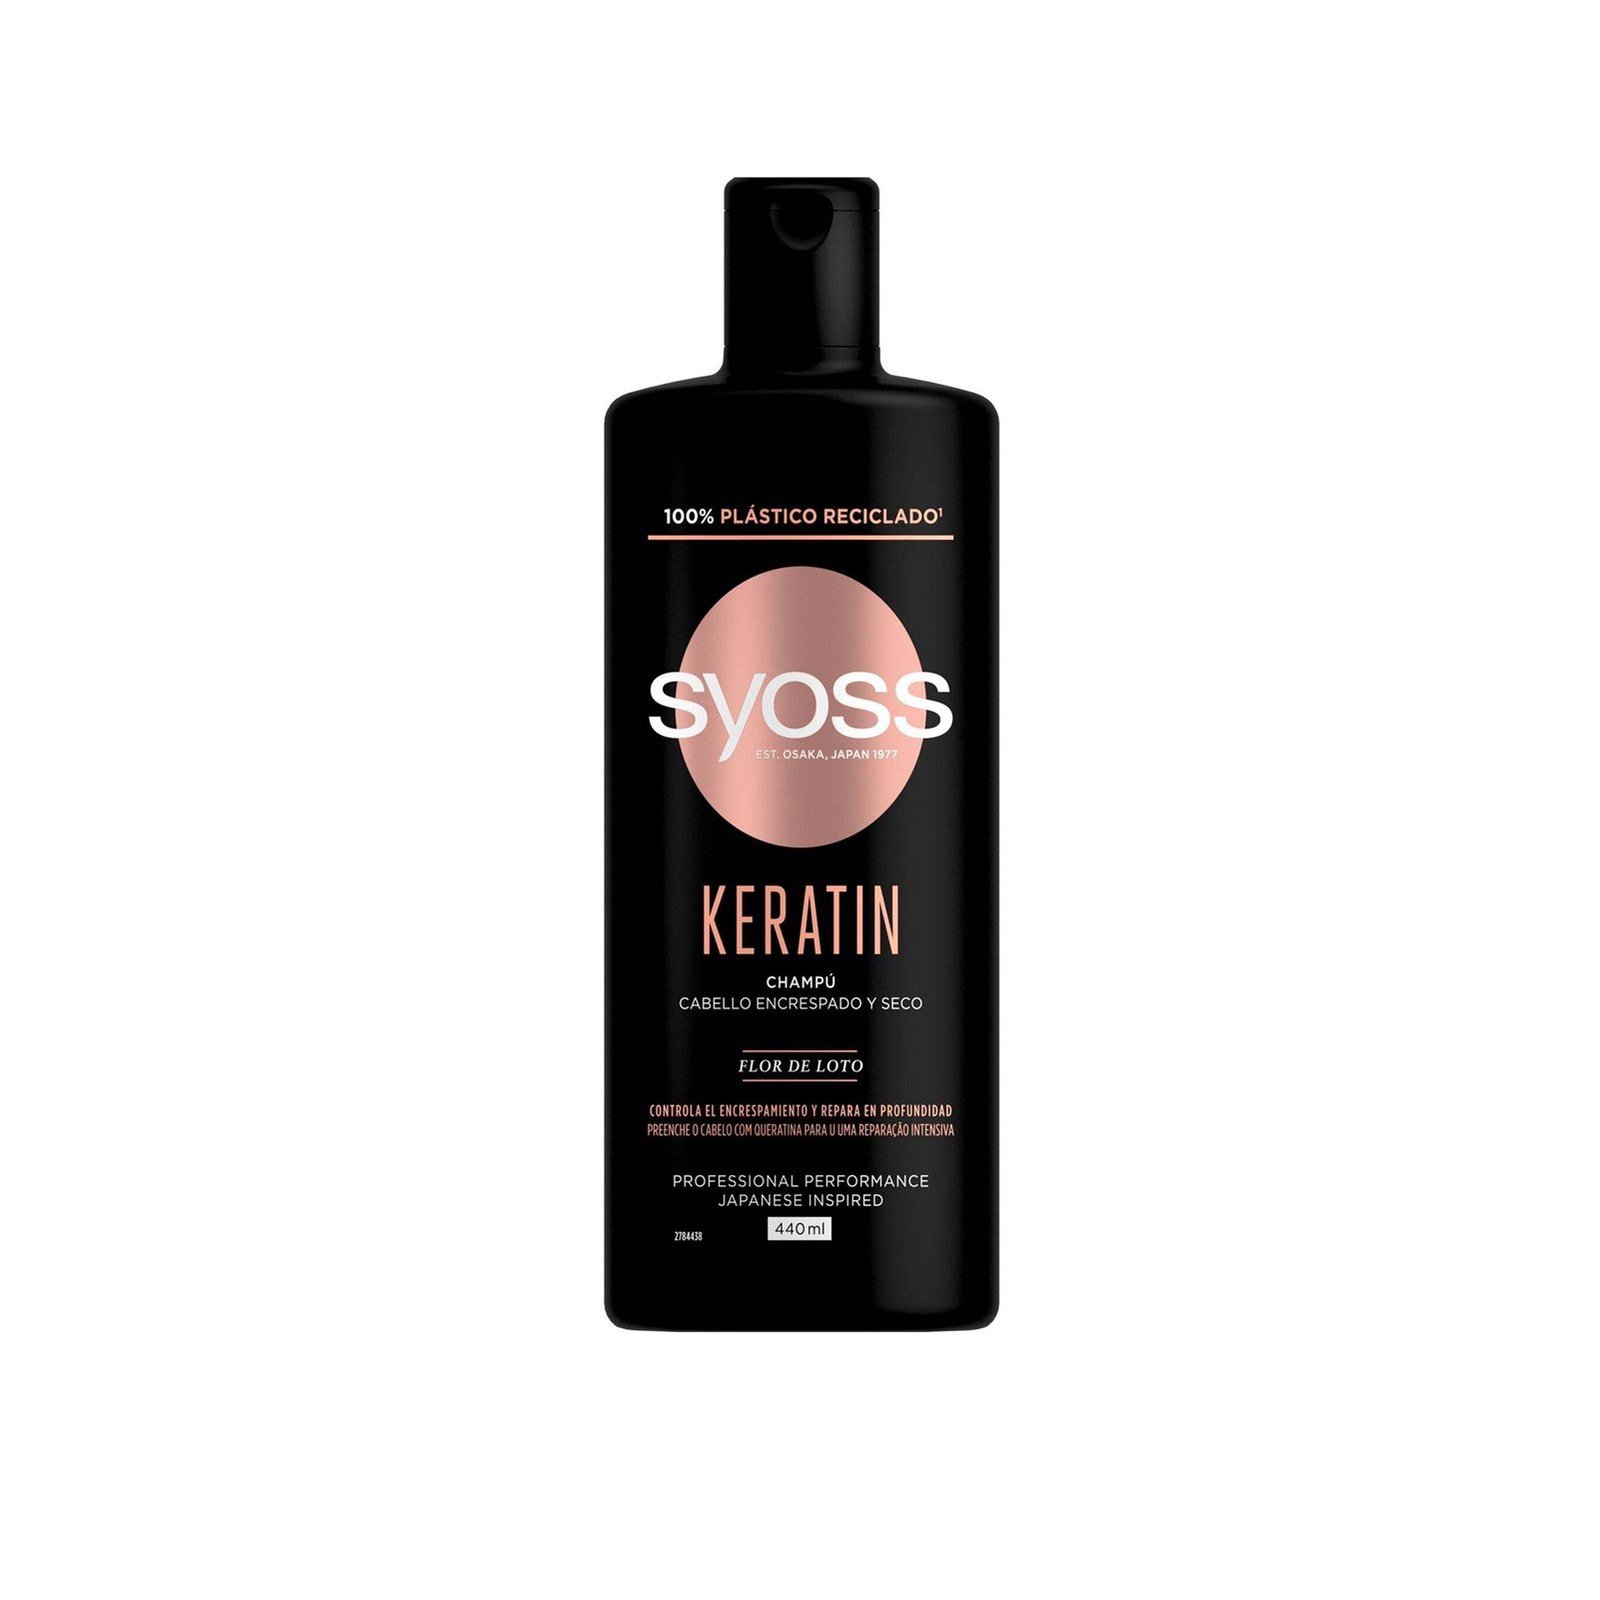 Syoss Keratin Shampoo 440ml (14.88fl oz)